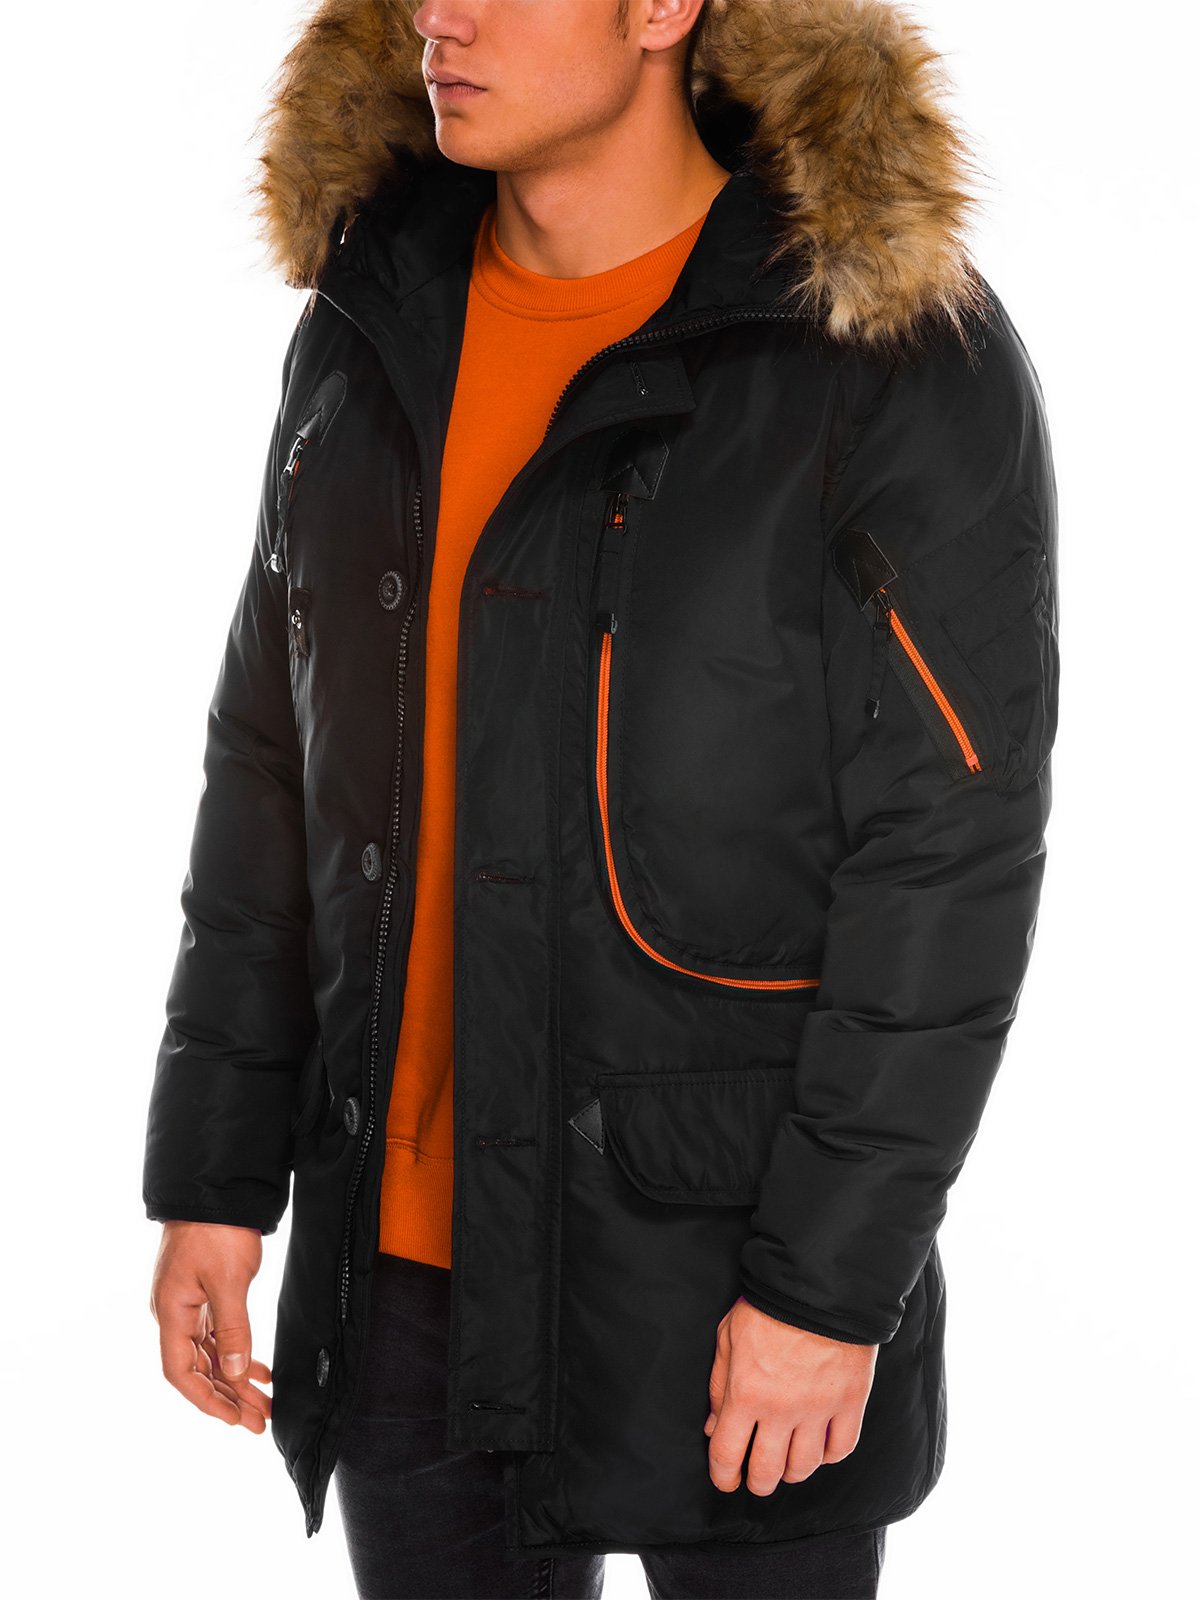 Men's winter parka jacket C369 - black | MODONE wholesale - Clothing ...